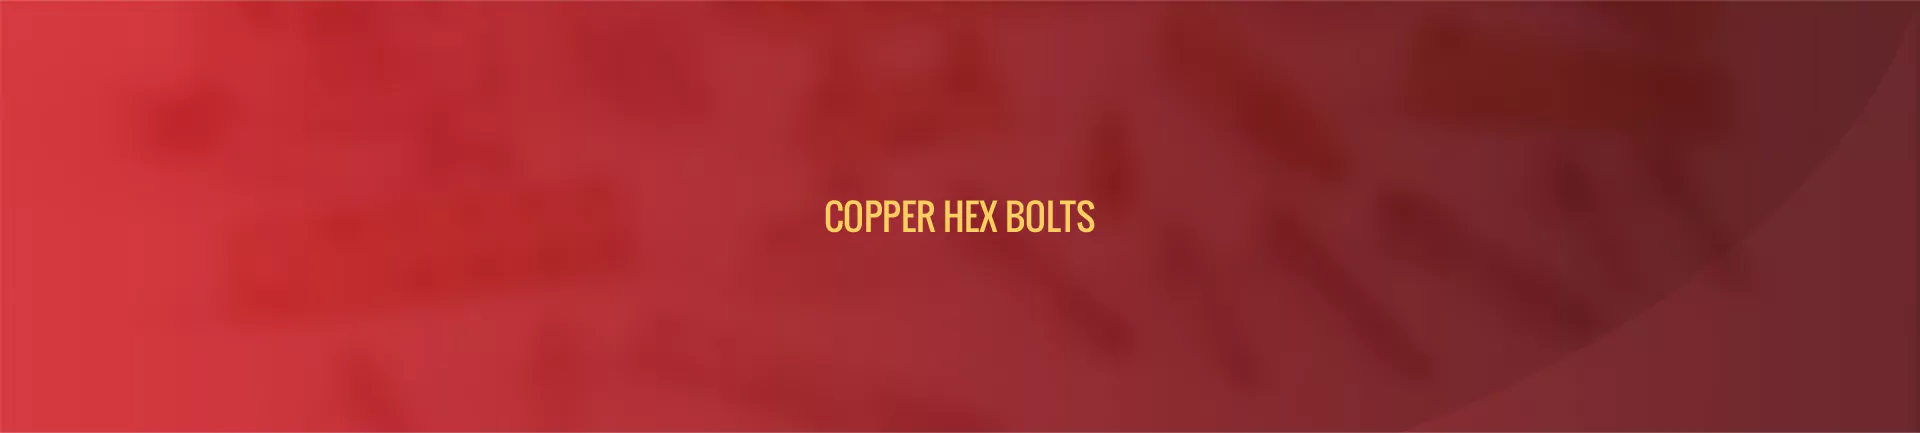 copper-hex-bolts-banner